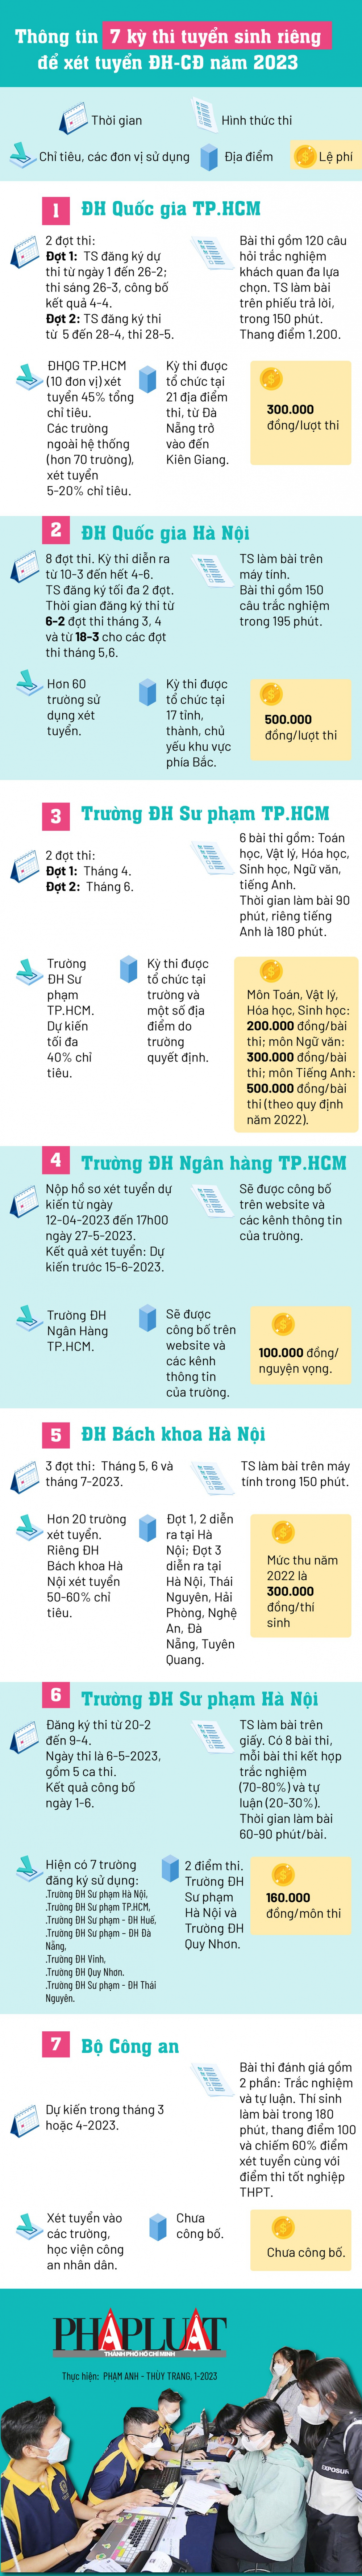 infographic-tuyen-sinh-dai-hoc-7-ky-thi-tuyen-sinh-rieng-2023-01-9773